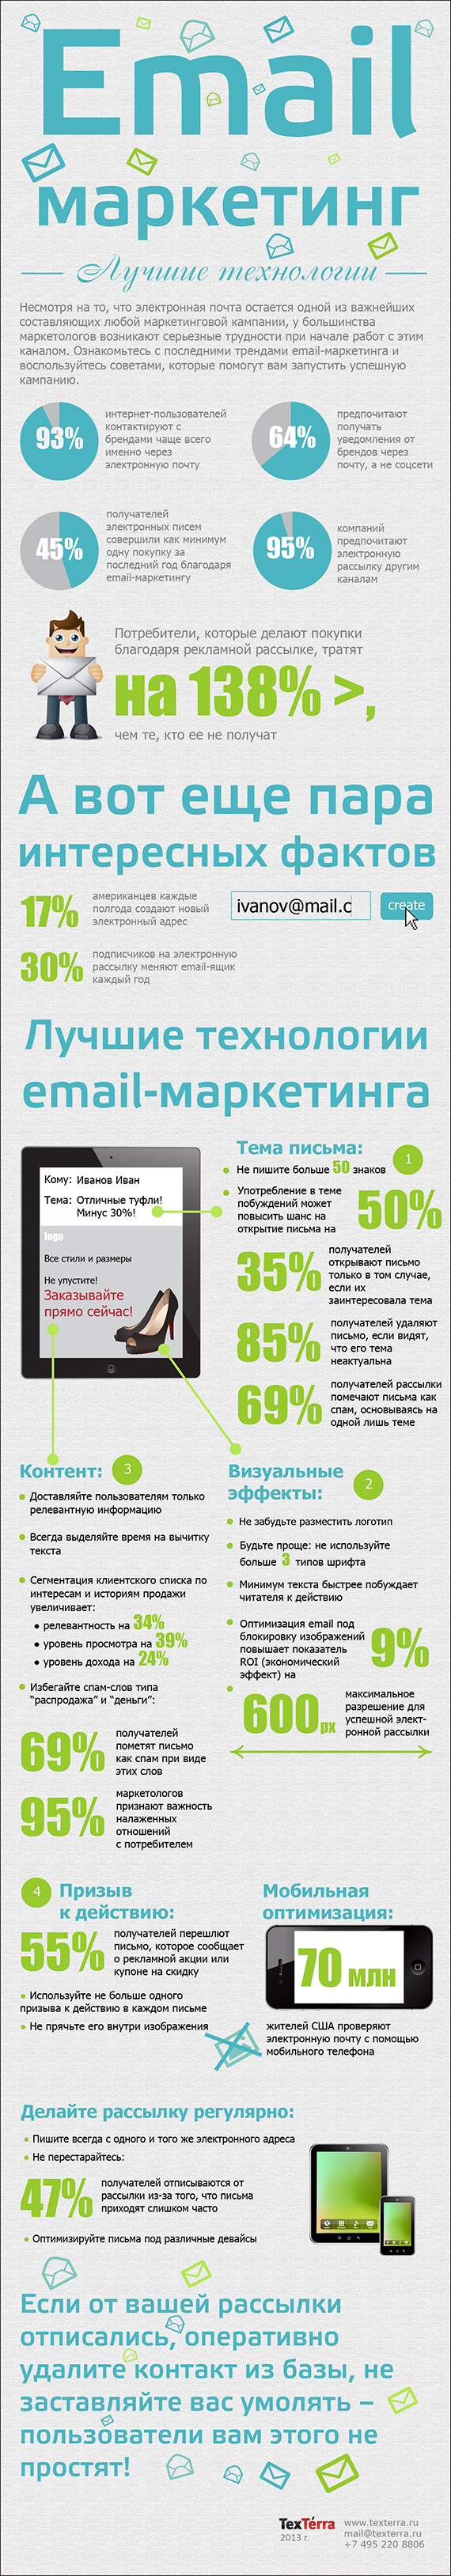 Пример инфографики для email-маркетолога